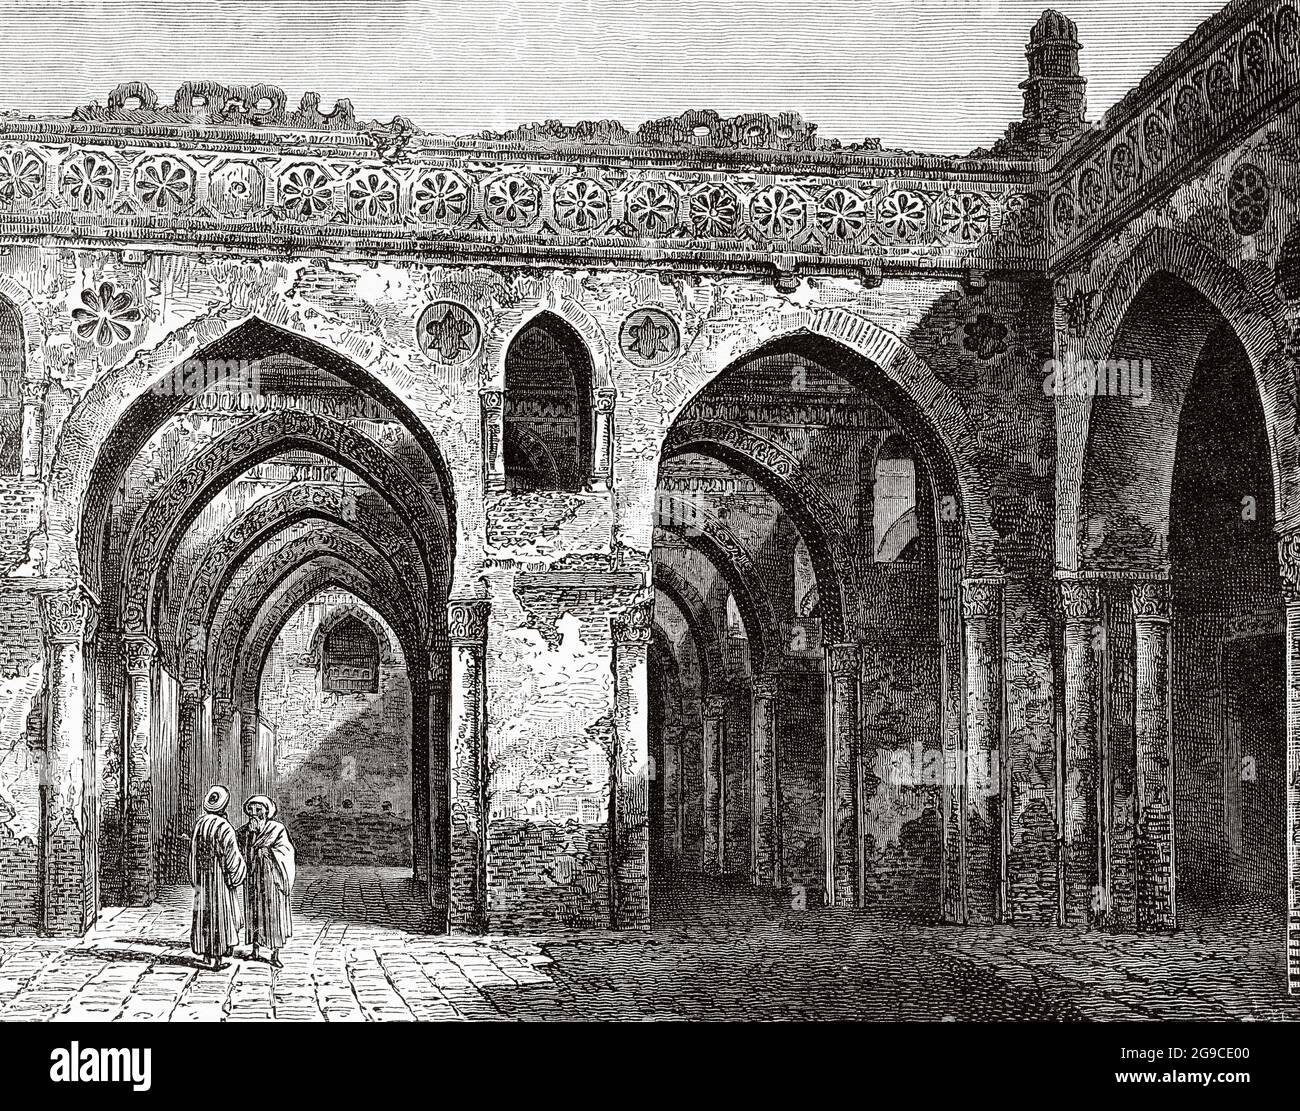 Ruinen der Ahmad ibn Tulun Moschee, erbaut im 9. Jahrhundert, Kairo, Ägypten, Nordafrika. Alte Illustration aus dem 19. Jahrhundert von El Mundo Ilustrado 1879 Stockfoto